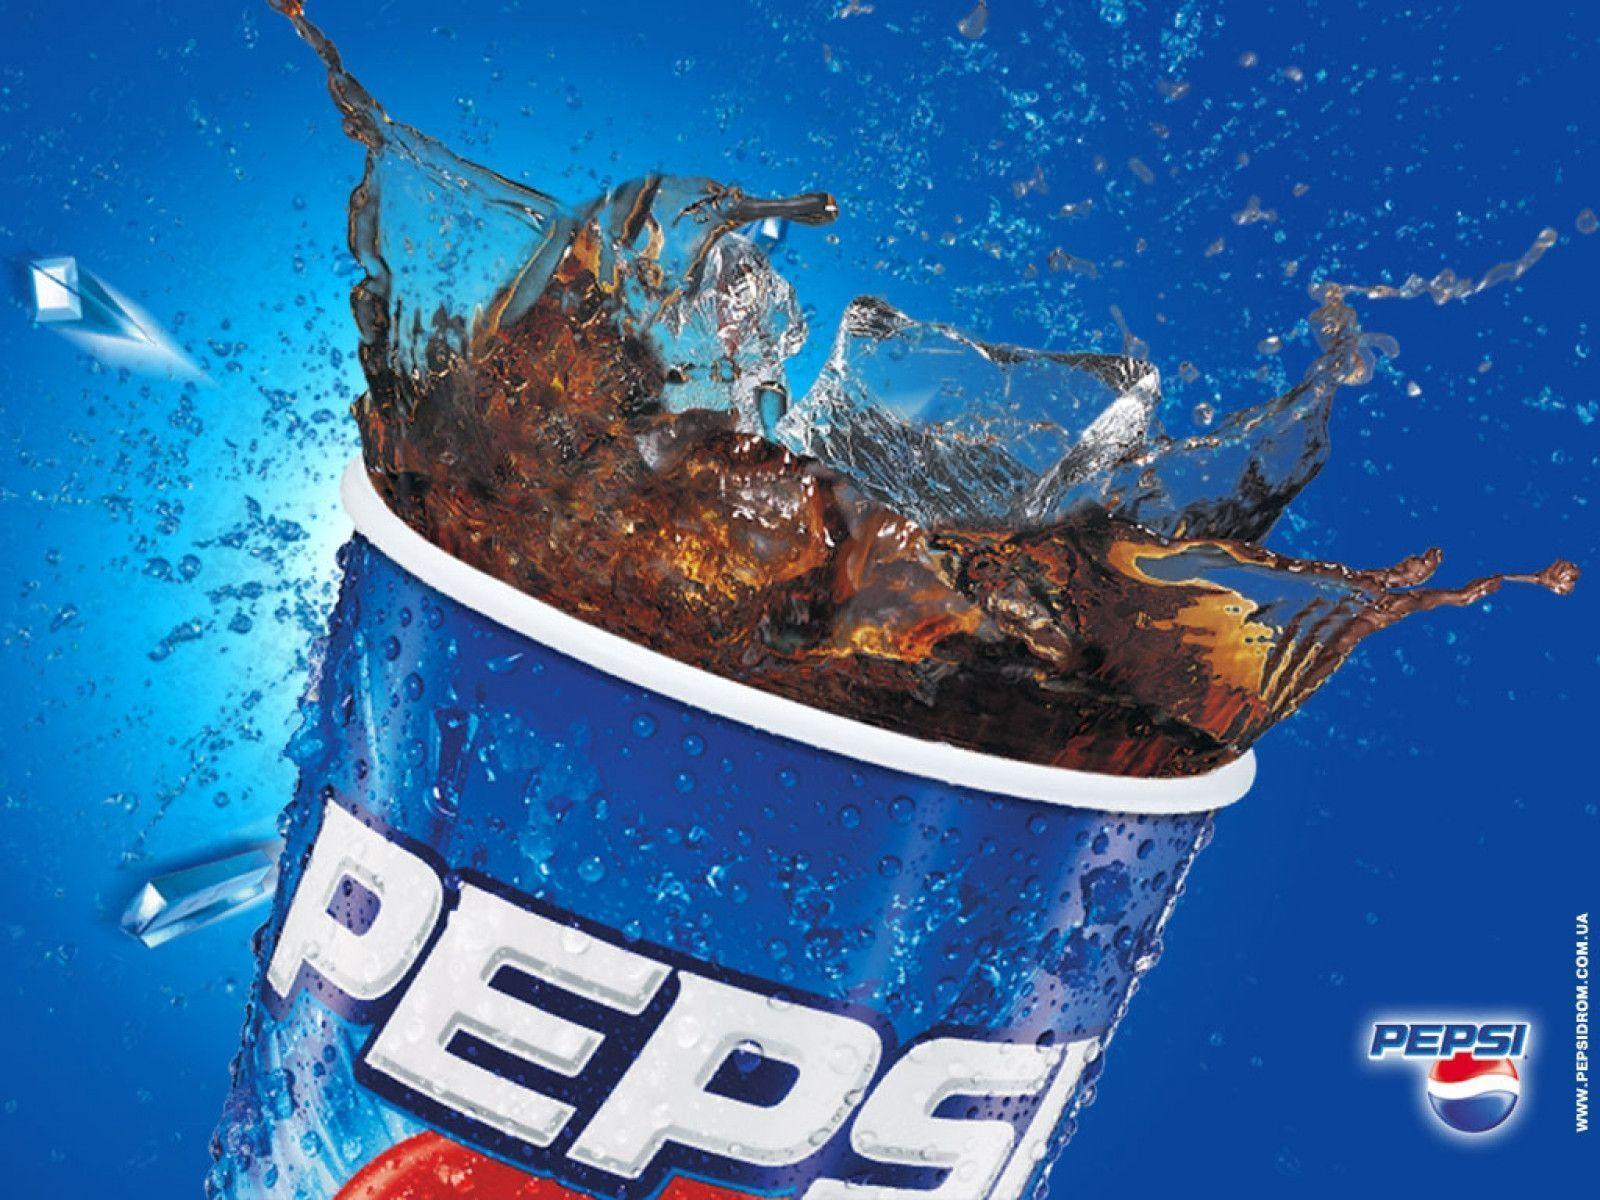 Pepsi Best Wallpaper Hd, Pepsi, Other